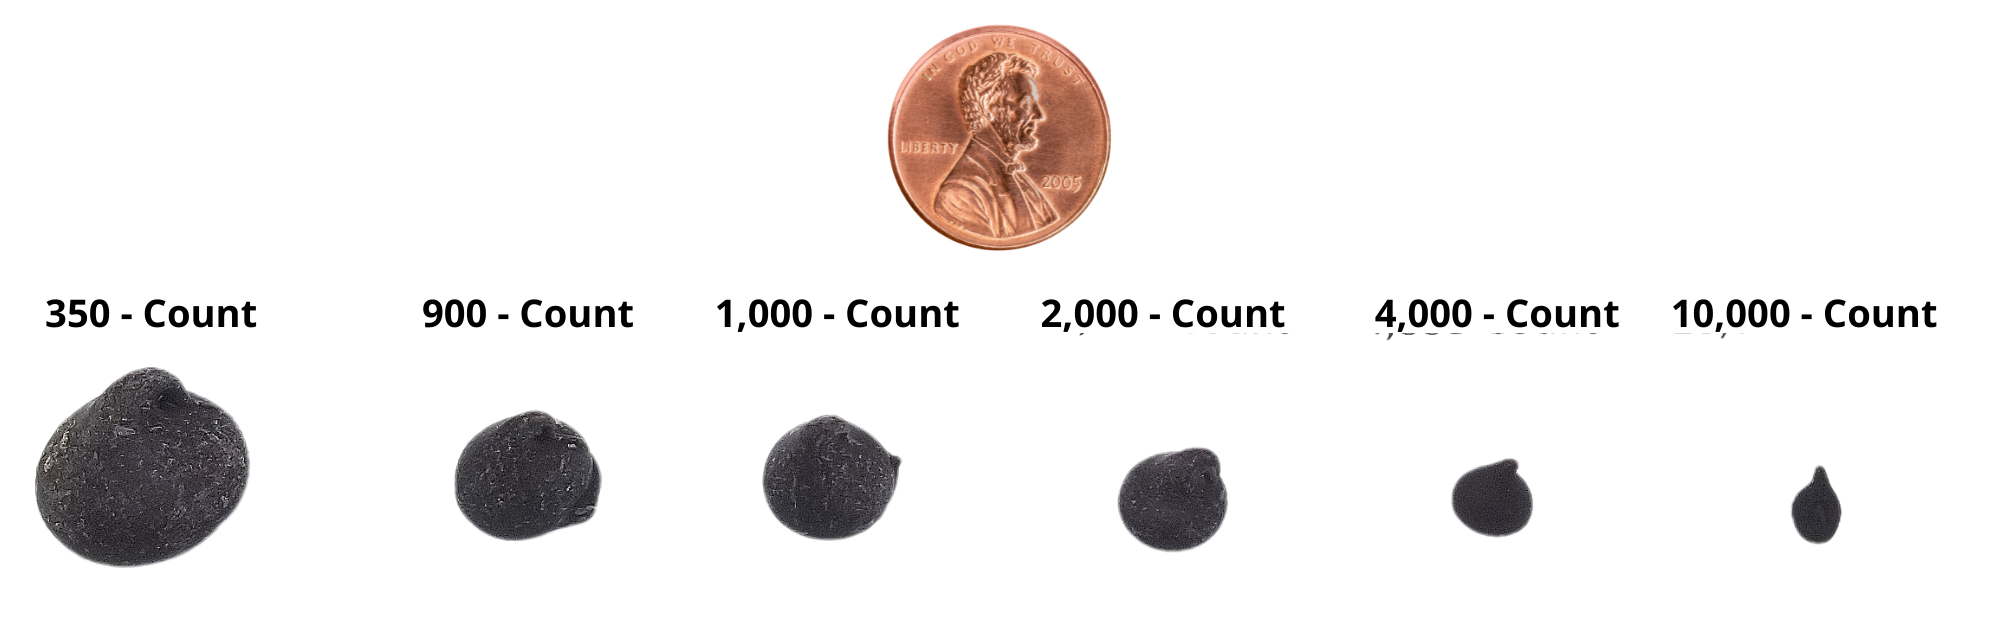 Chocolate Chip Size Comparison